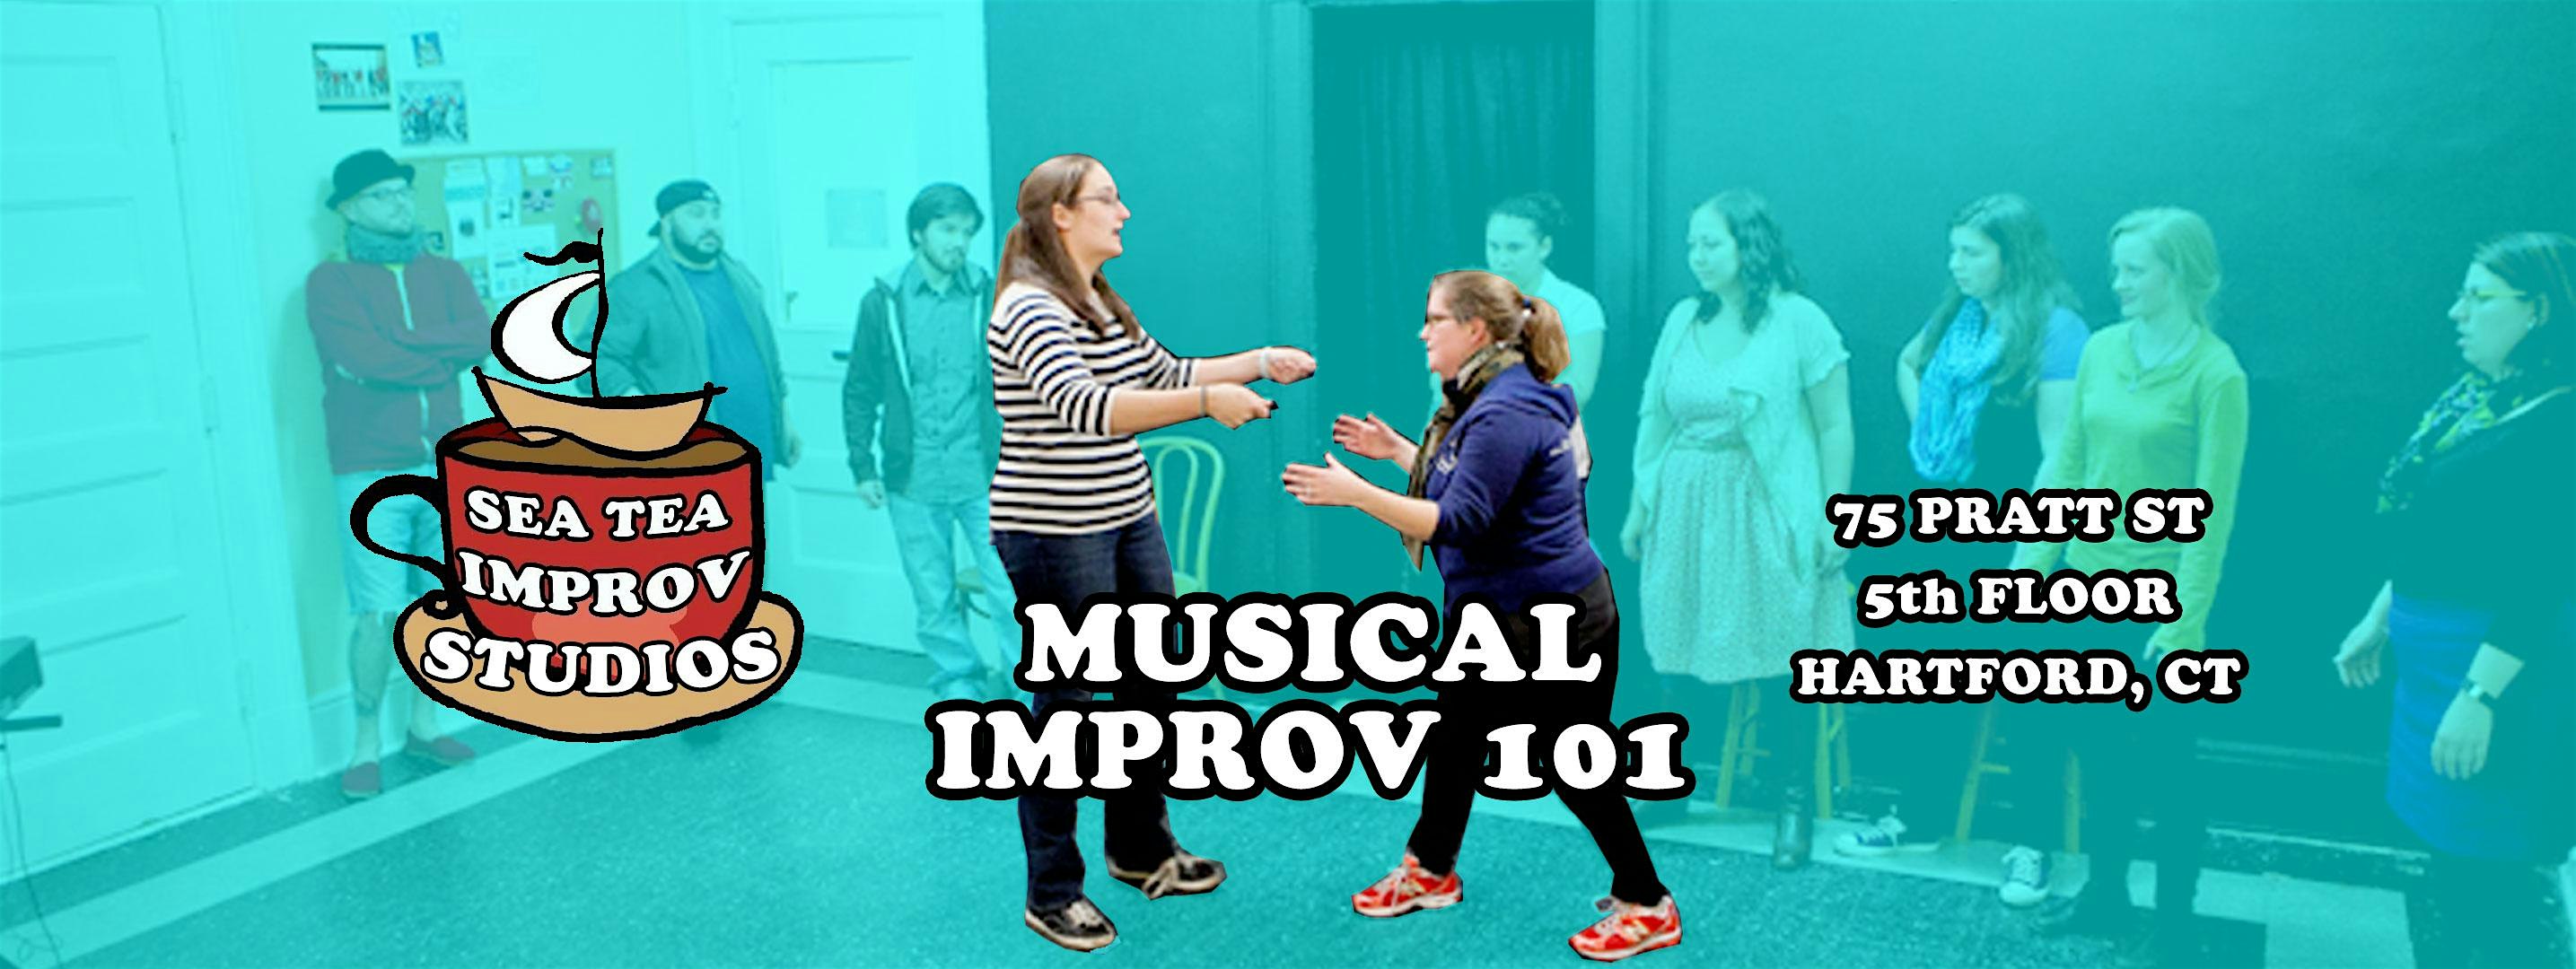 Musical Improv 101